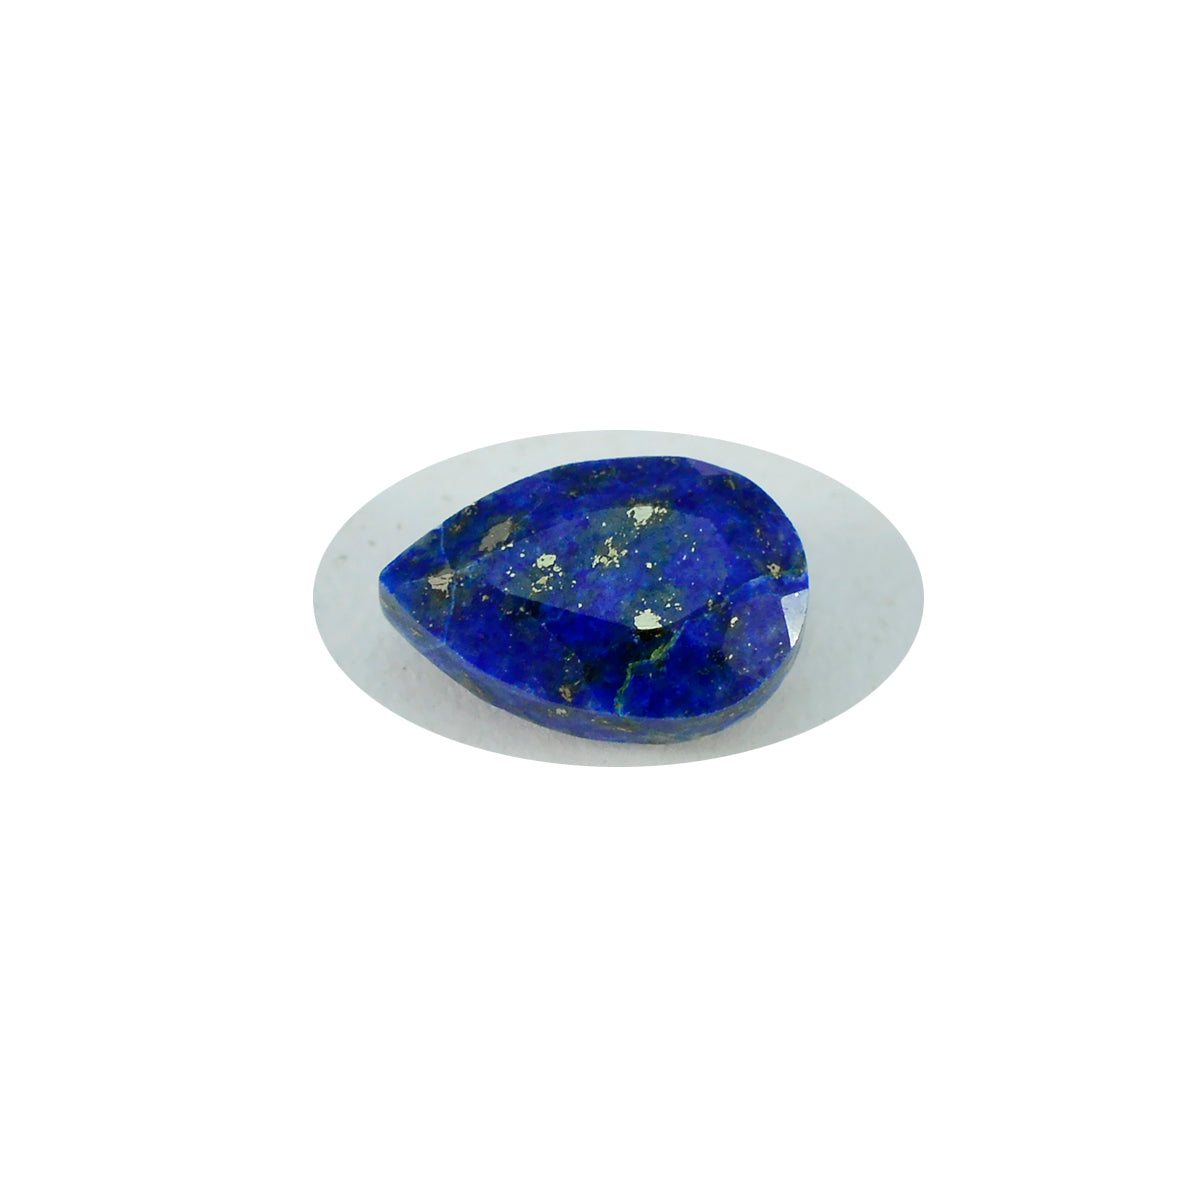 Riyogems 1PC Genuine Blue Lapis Lazuli Faceted 12x16 mm Pear Shape awesome Quality Loose Gemstone